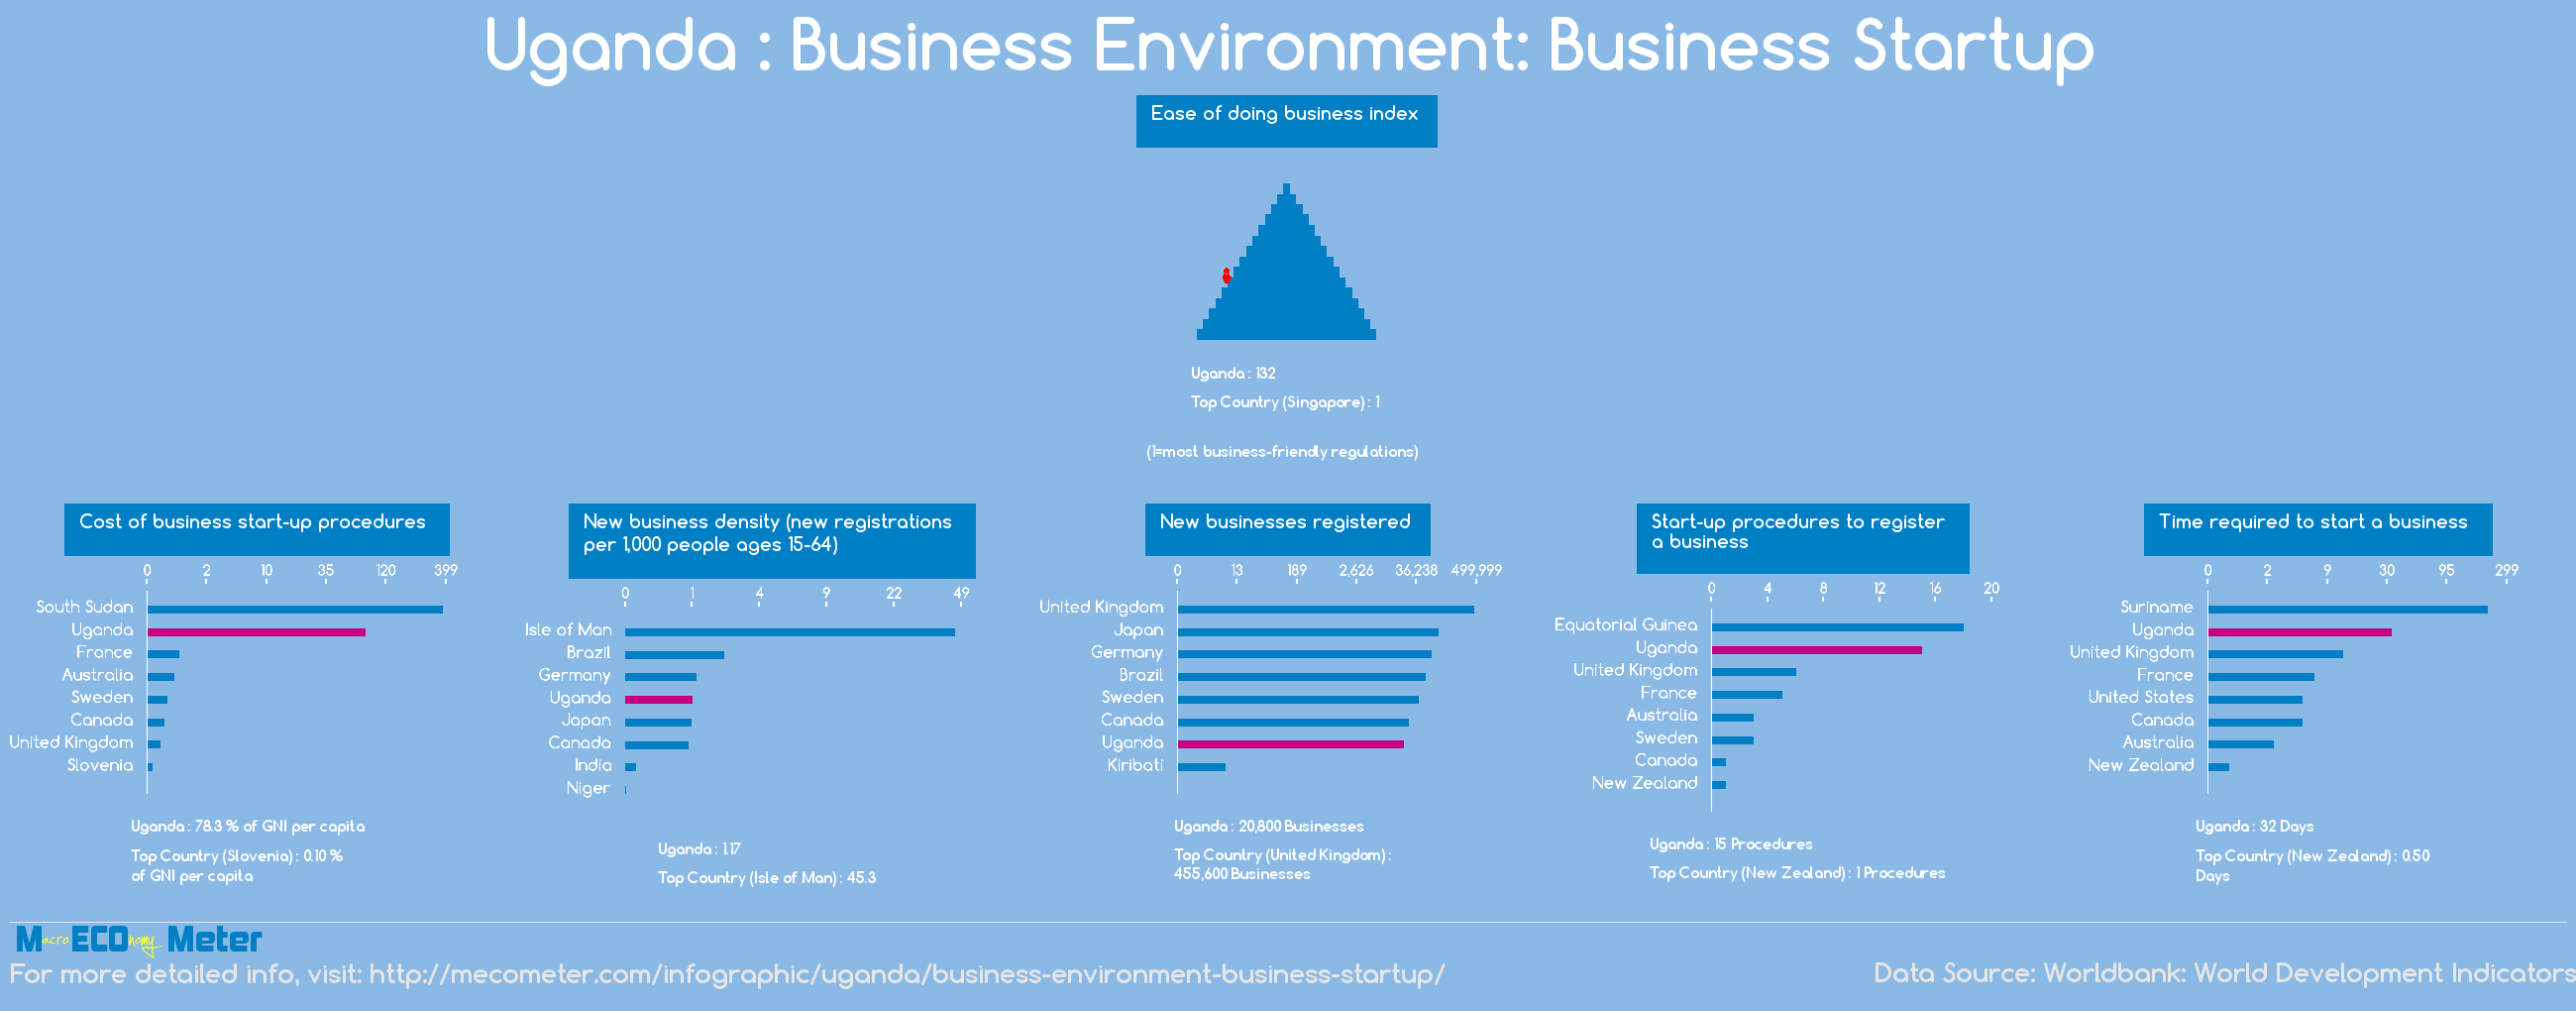 Uganda : Business Environment: Business Startup